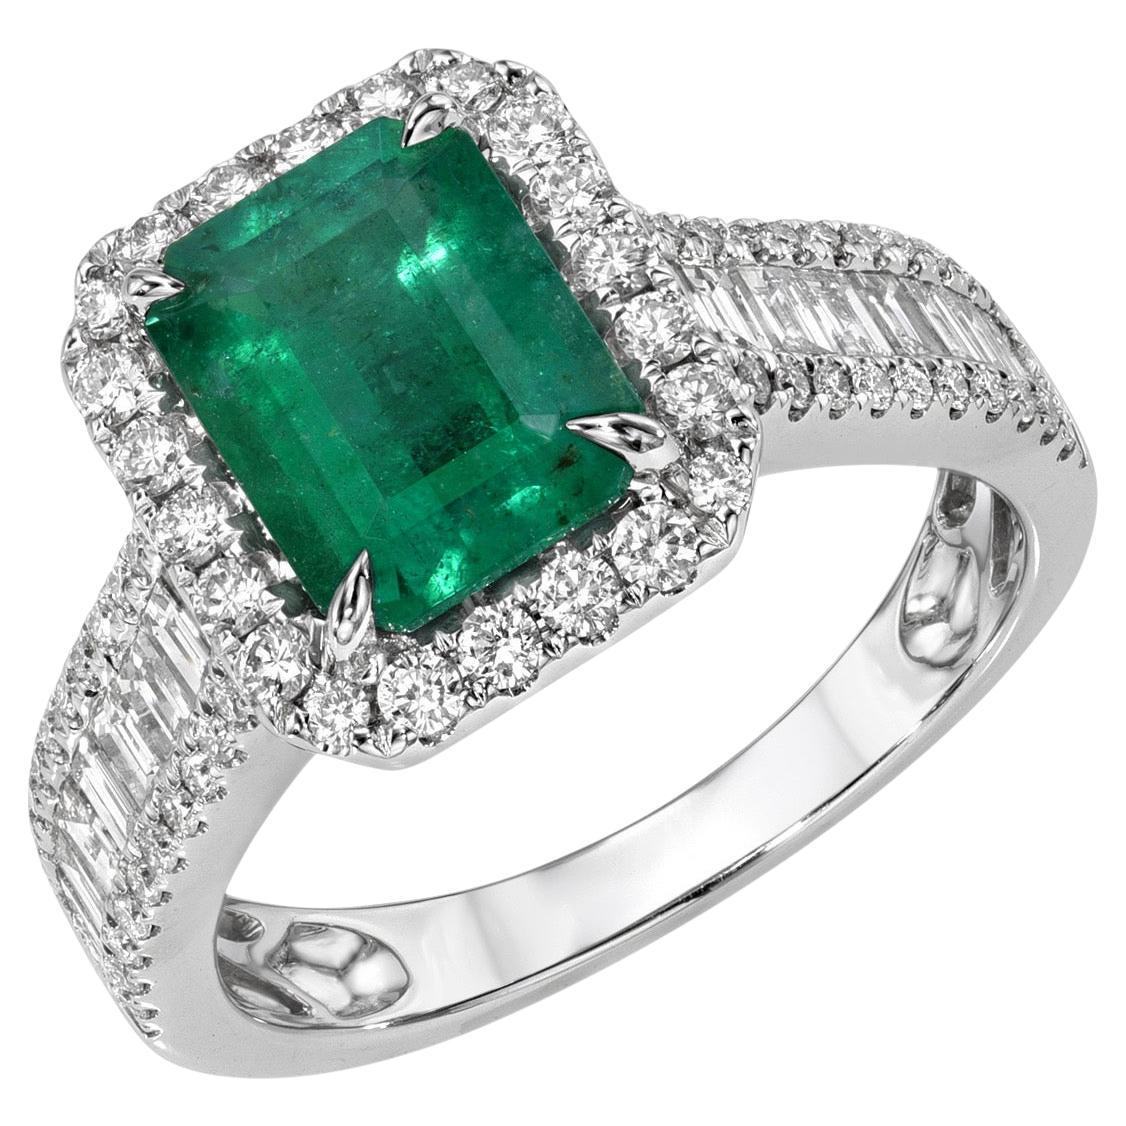 Emerald Ring 1.96 Carat Emerald Cut